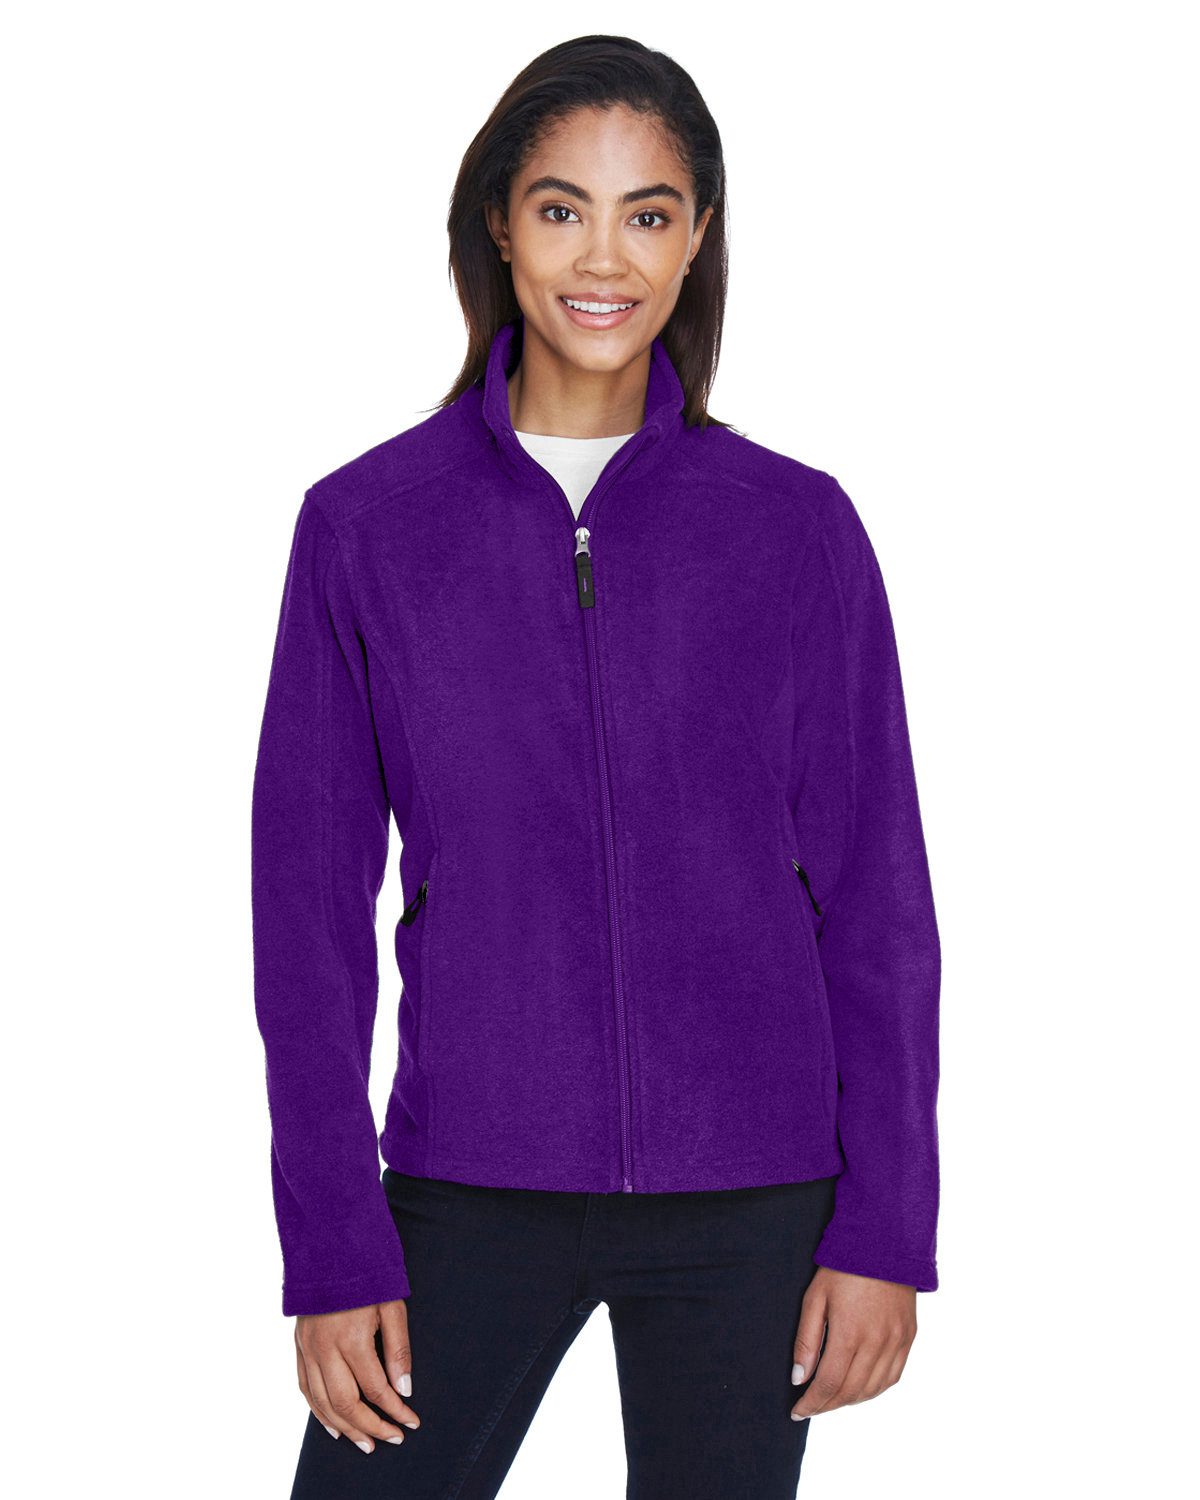 Core 365 Ladies' Journey Fleece Jacket #78190 Purple